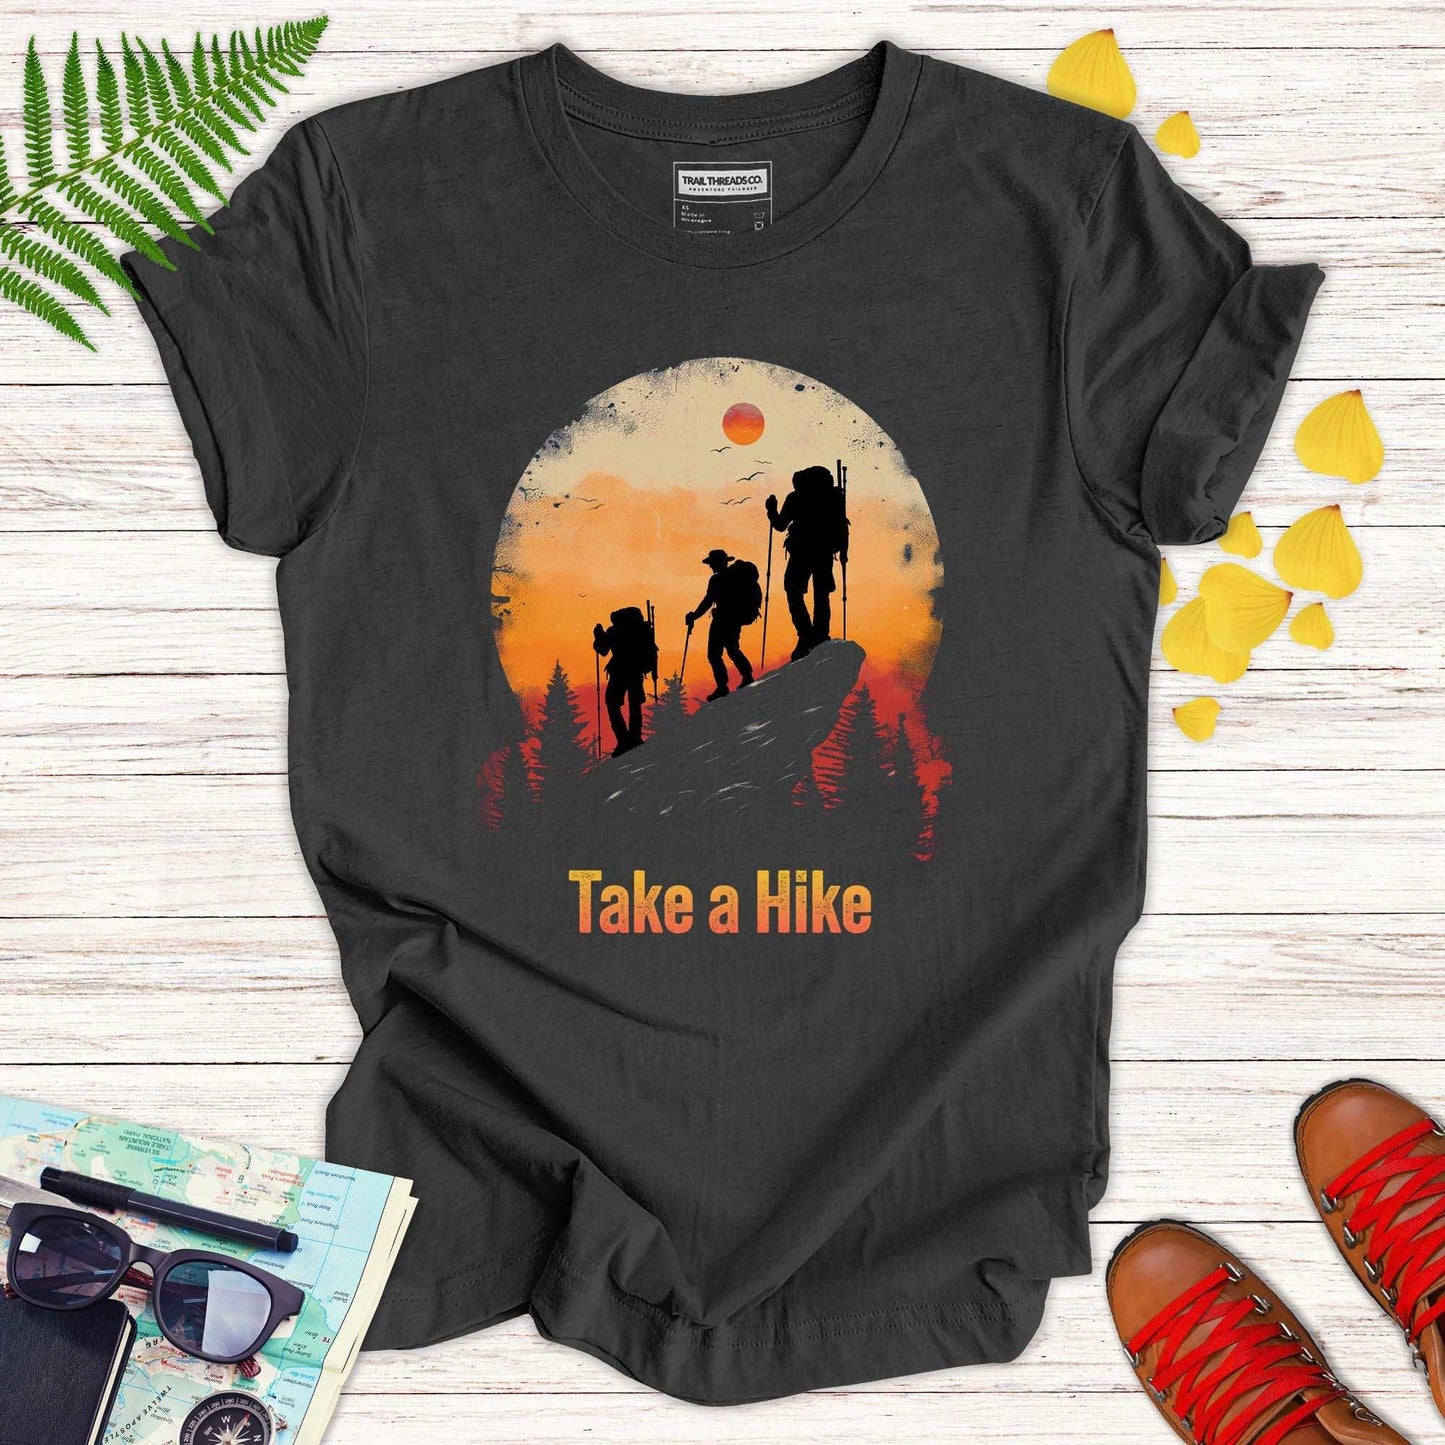 Take a Hike Heater T-shirt